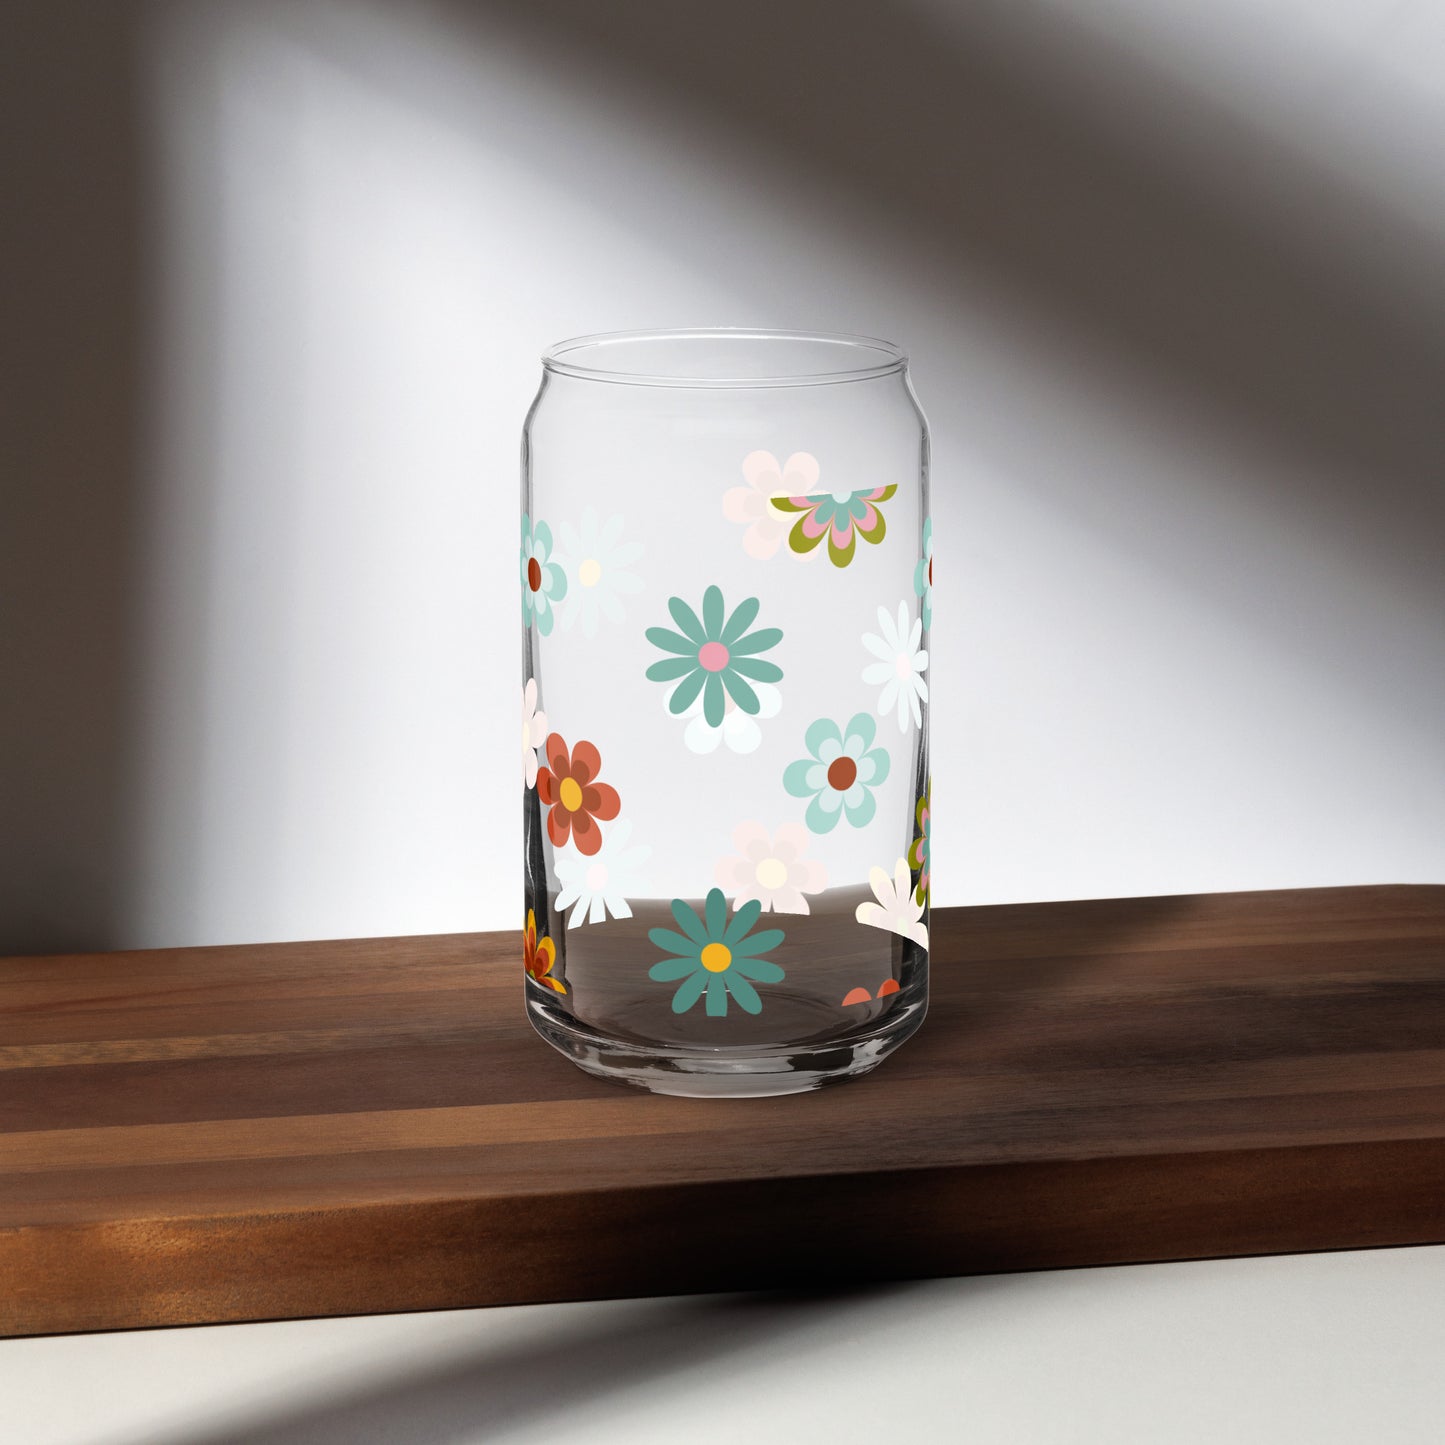 Retro FlowersCan-shaped glass